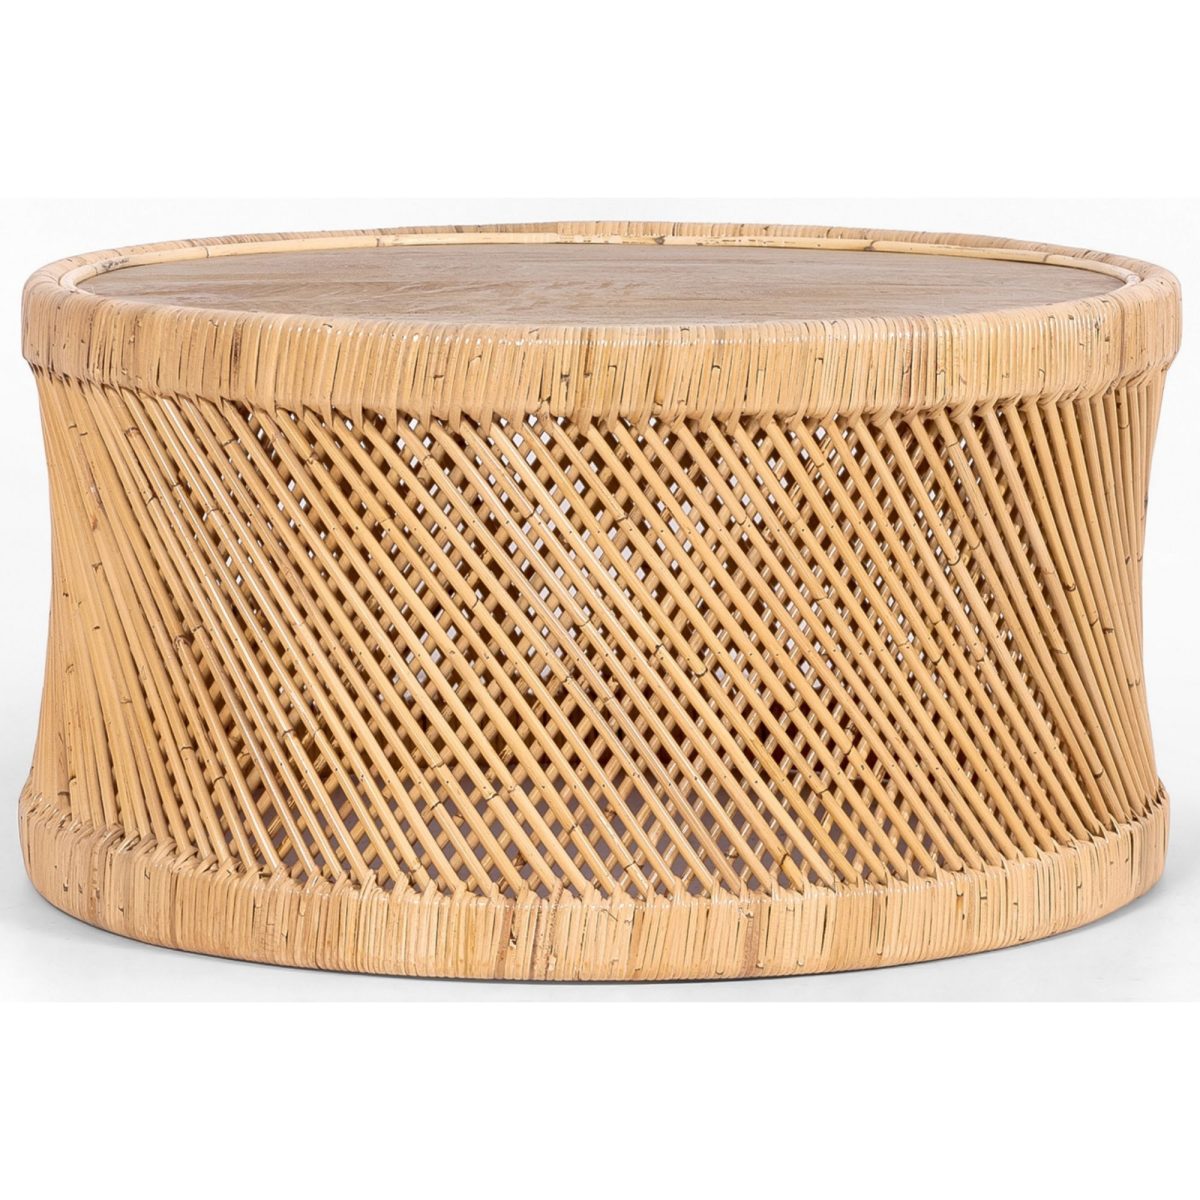 Freesia 80cm Round Coffee Table Mango Wood Top Rattan Frame – Natural